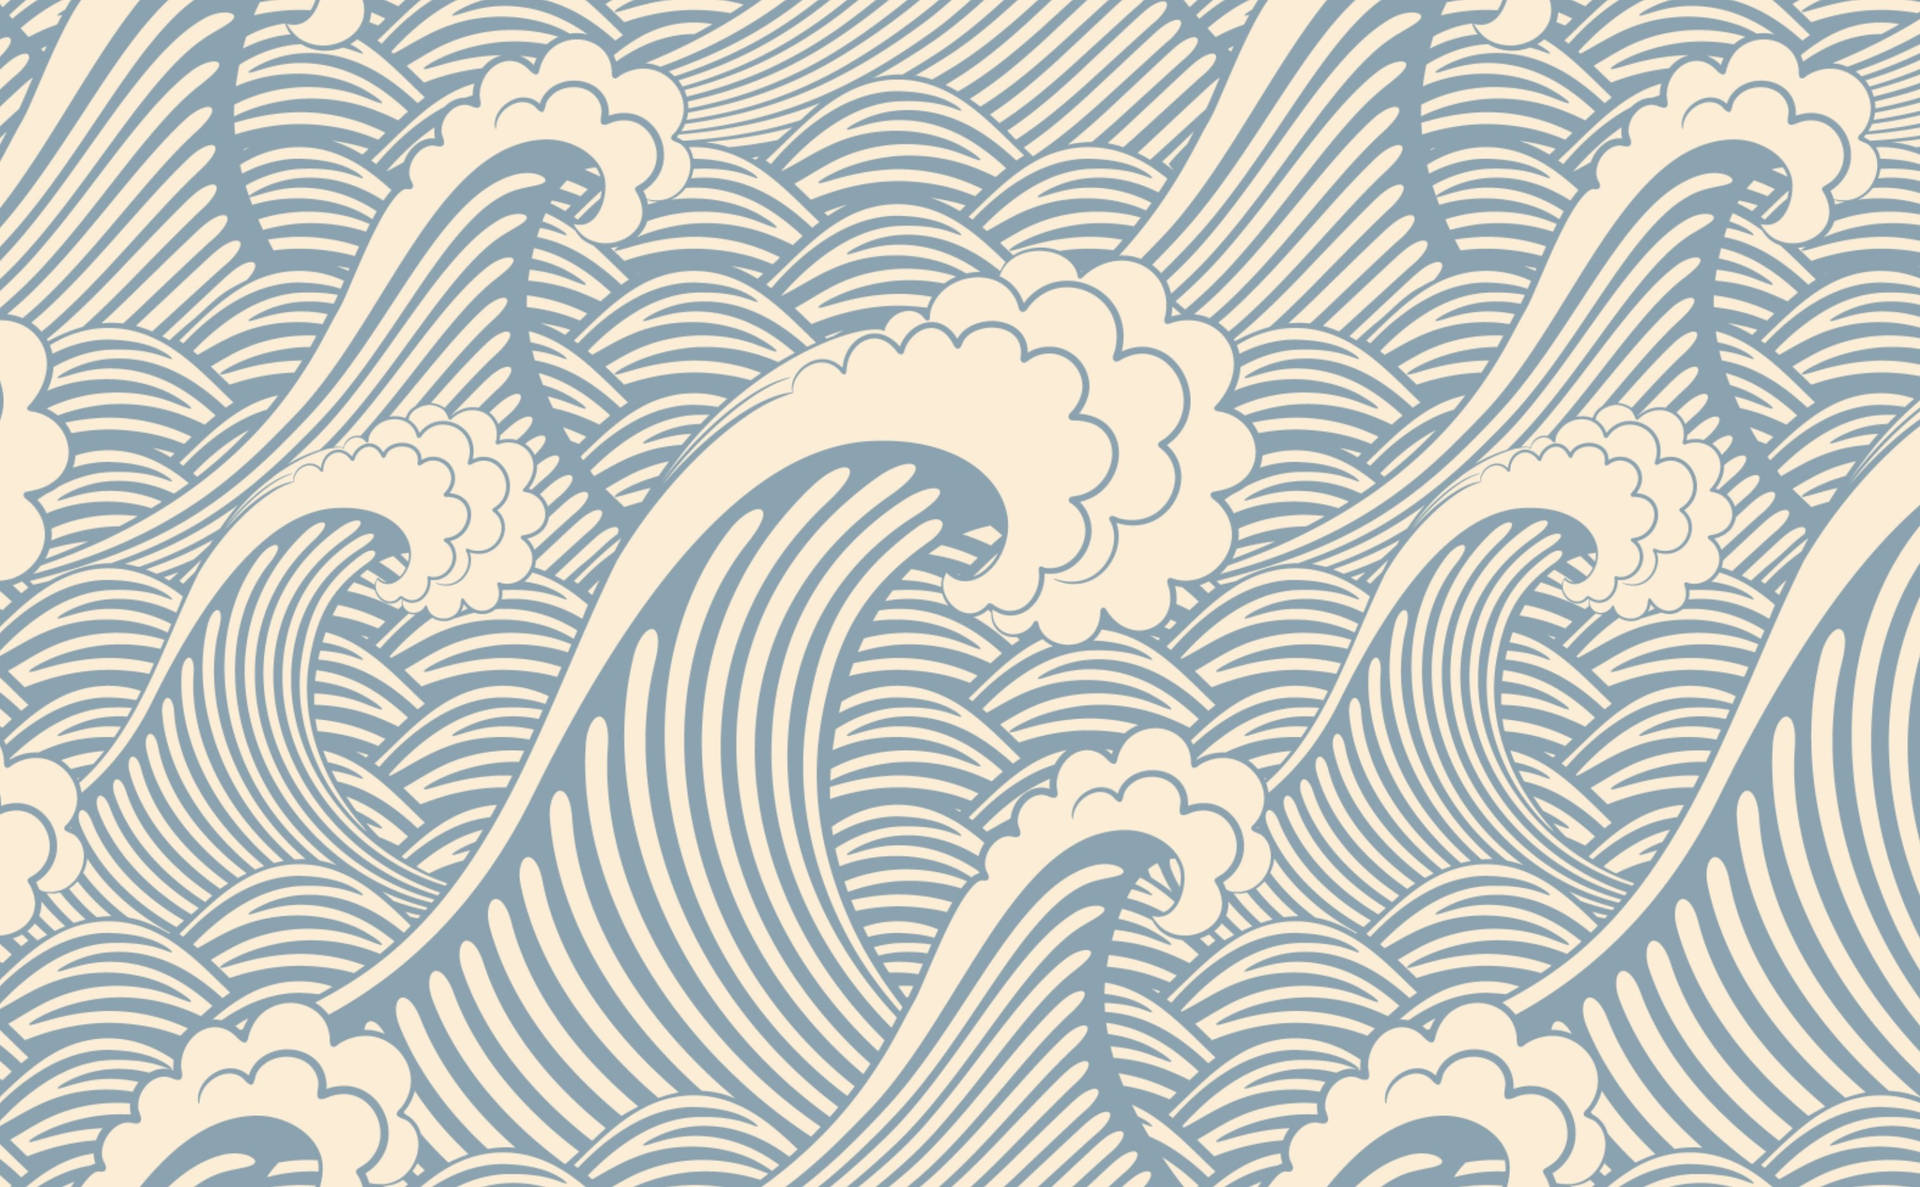 Inspiring Nautical Waves Design Wallpaper